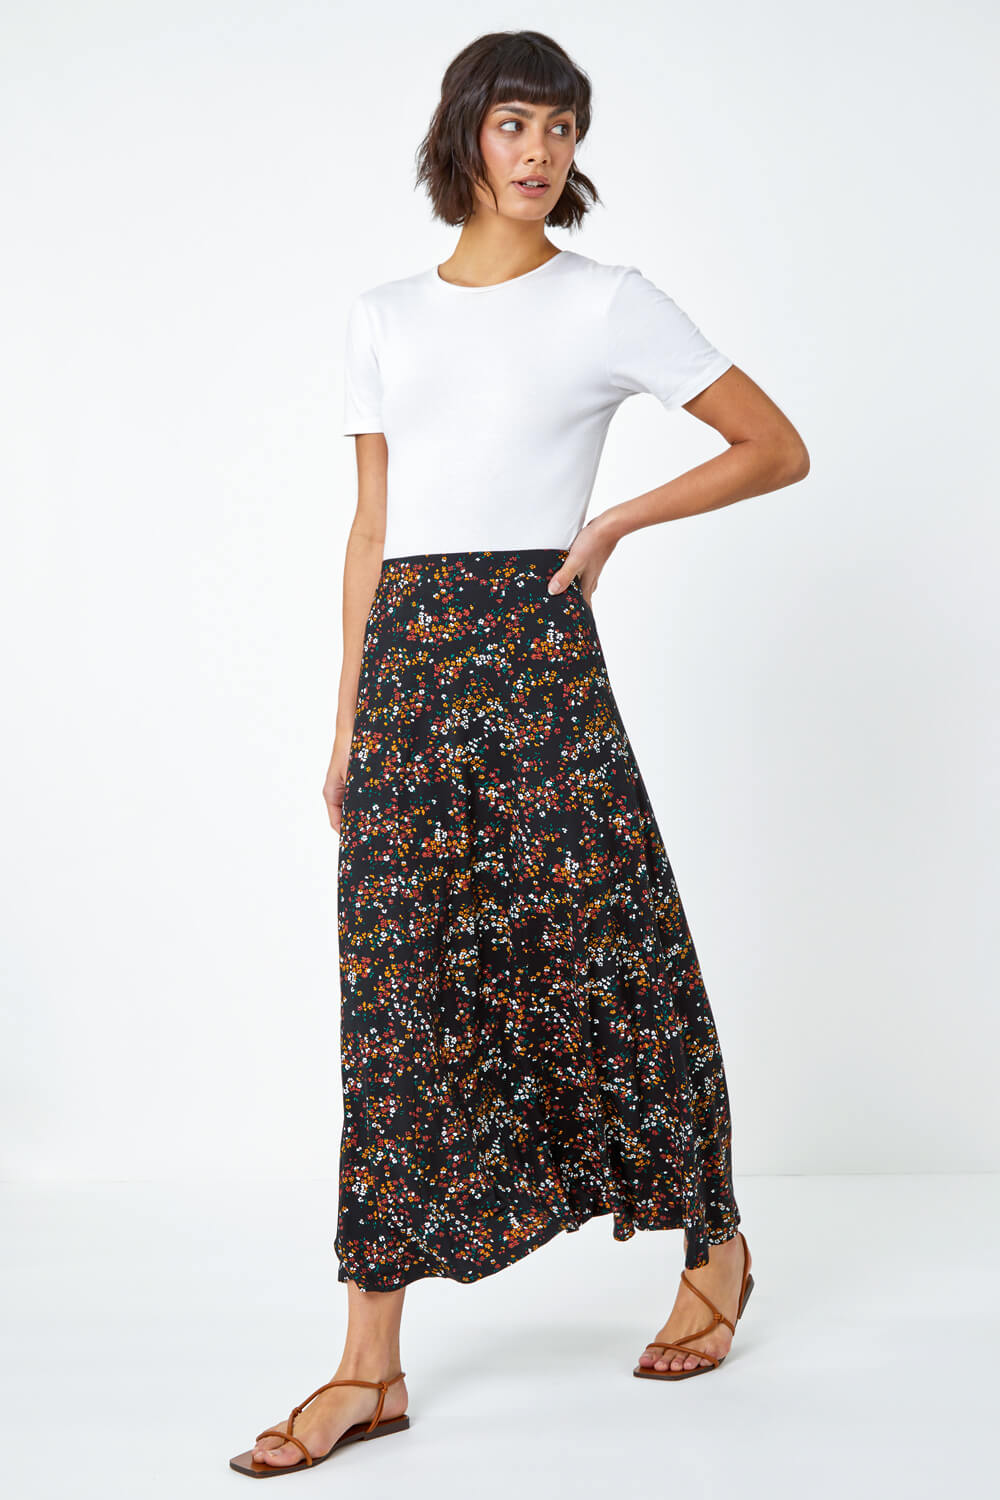 Ditsy Floral Jersey Skirt in Black - Roman Originals UK